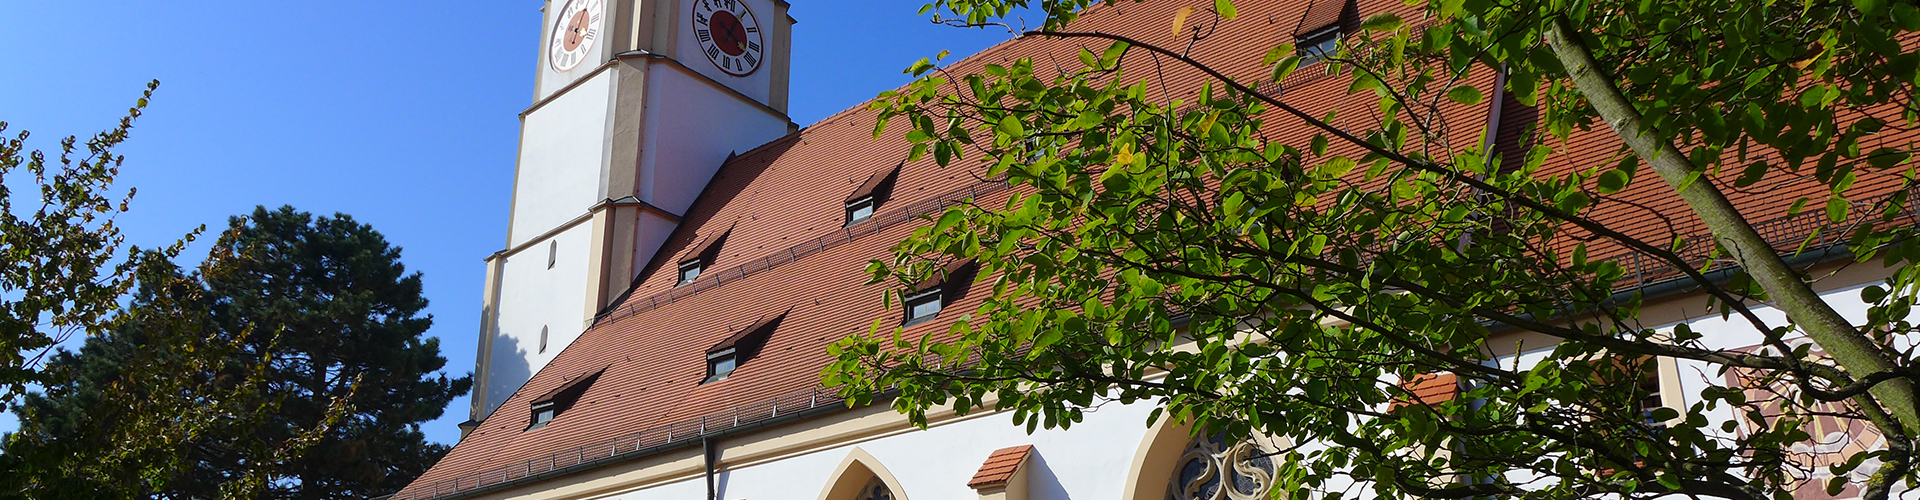 Katholische Kirche St. Peter, Markt Velden